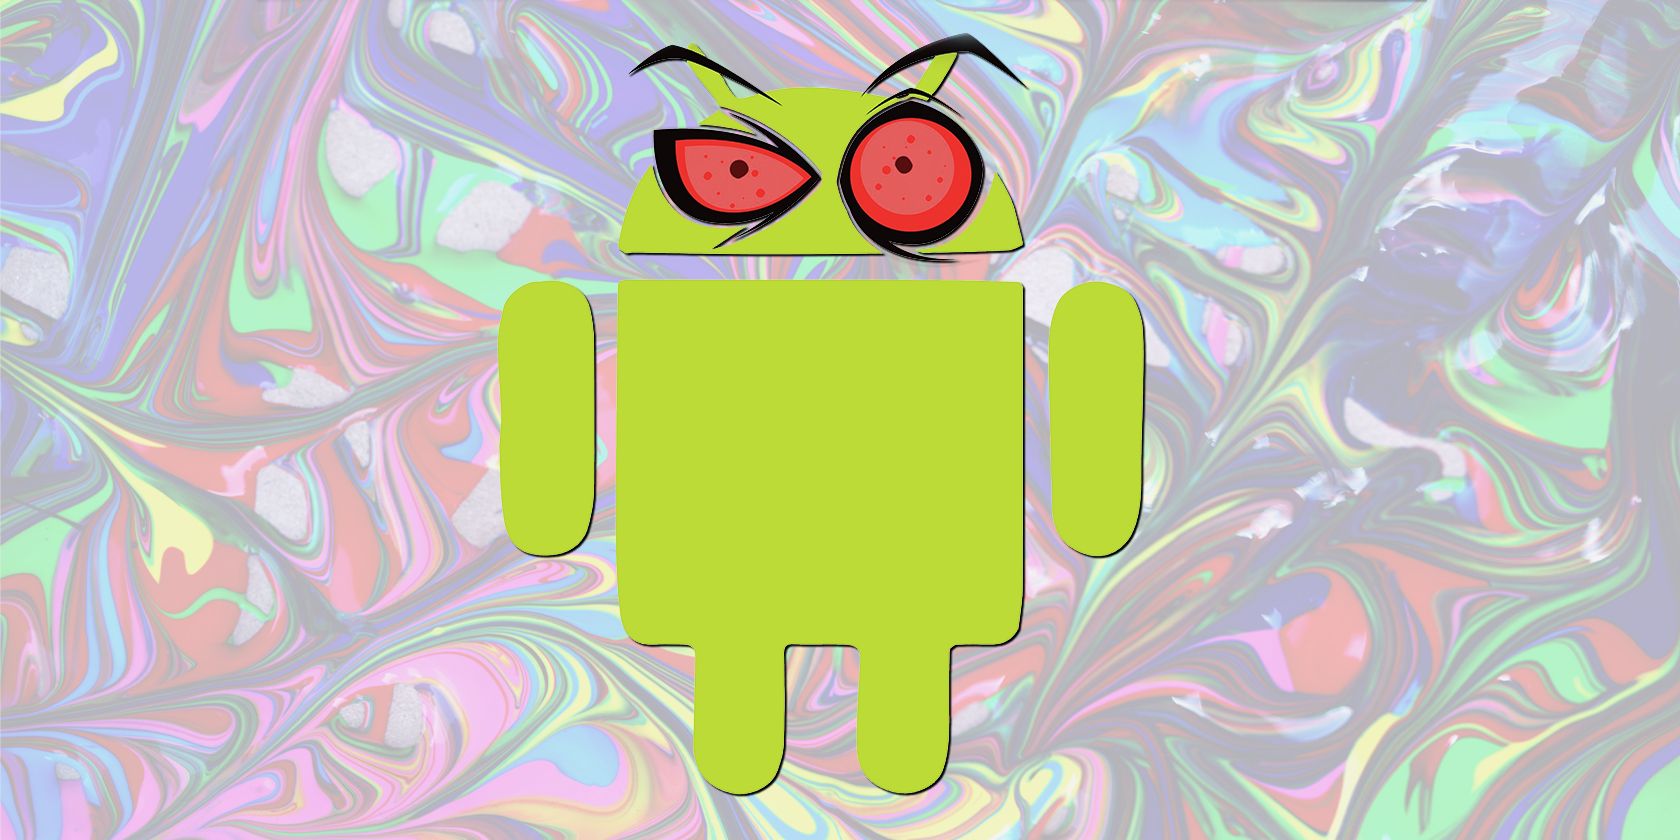 Bad Android logo